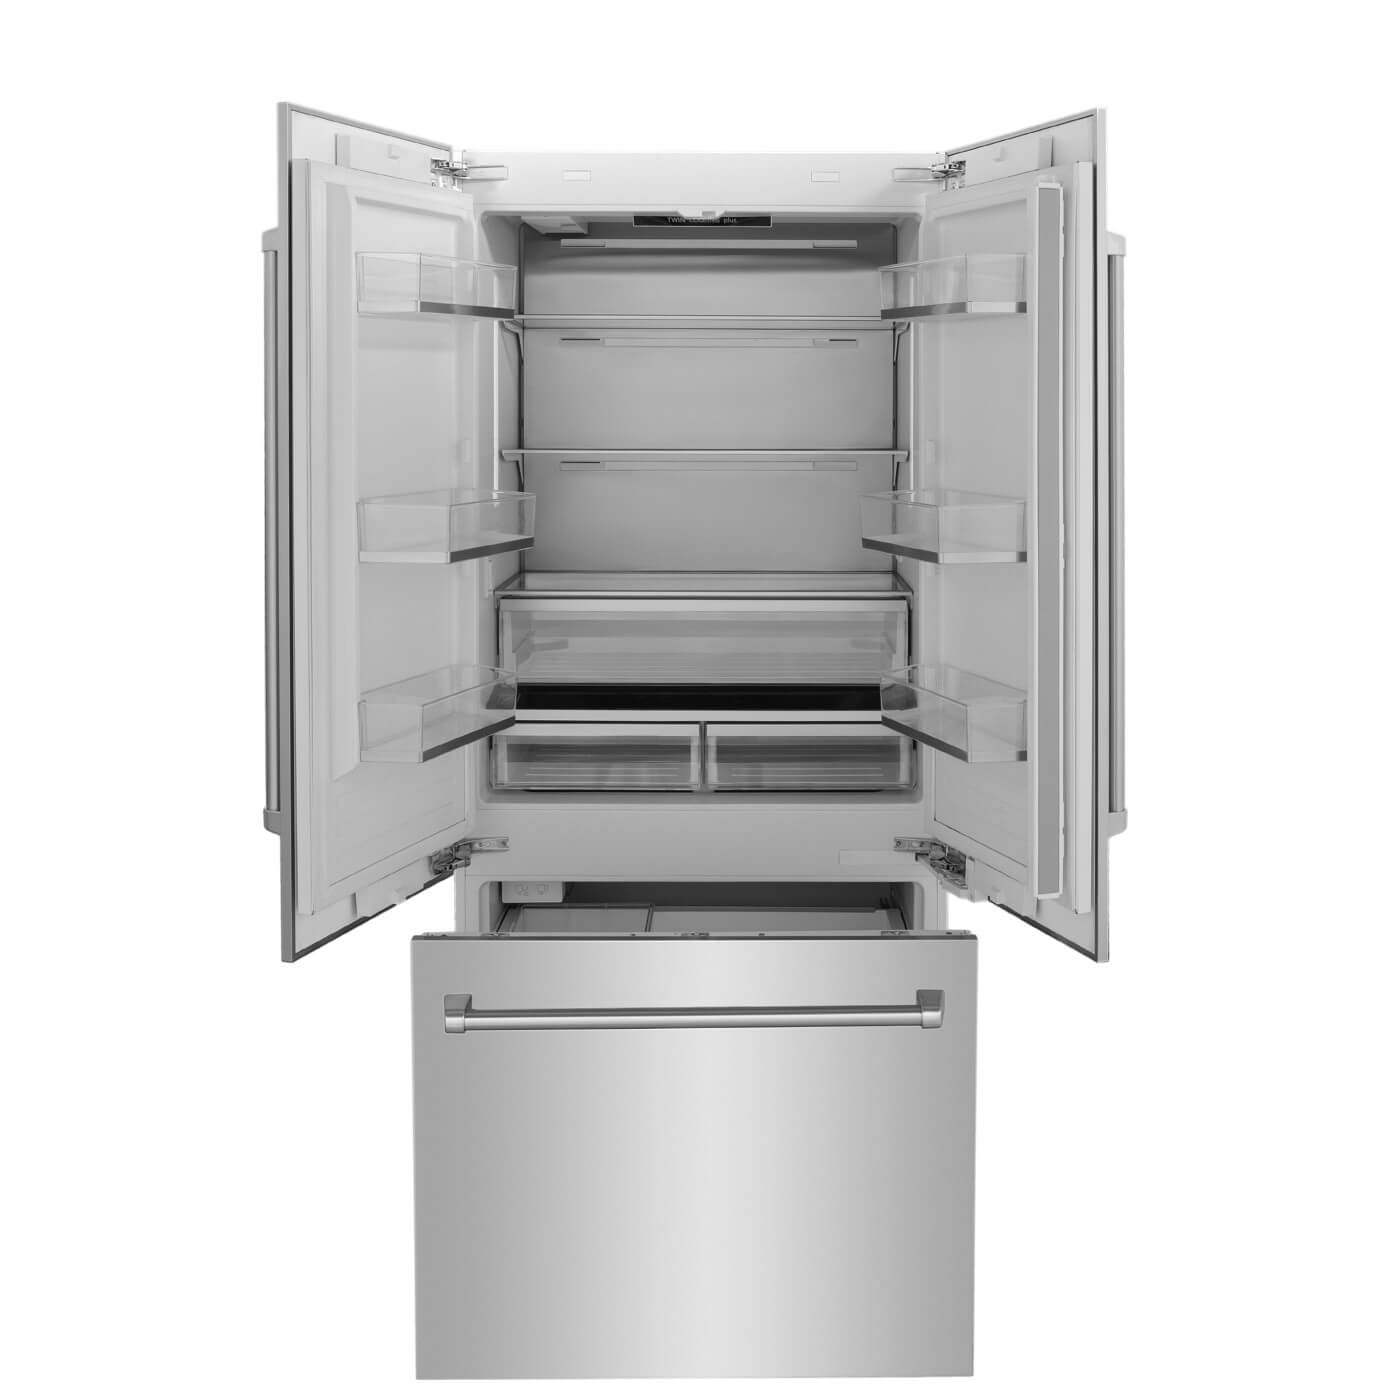 ZLINE 36-inch Built-in Refrigerator in Stainless Steel